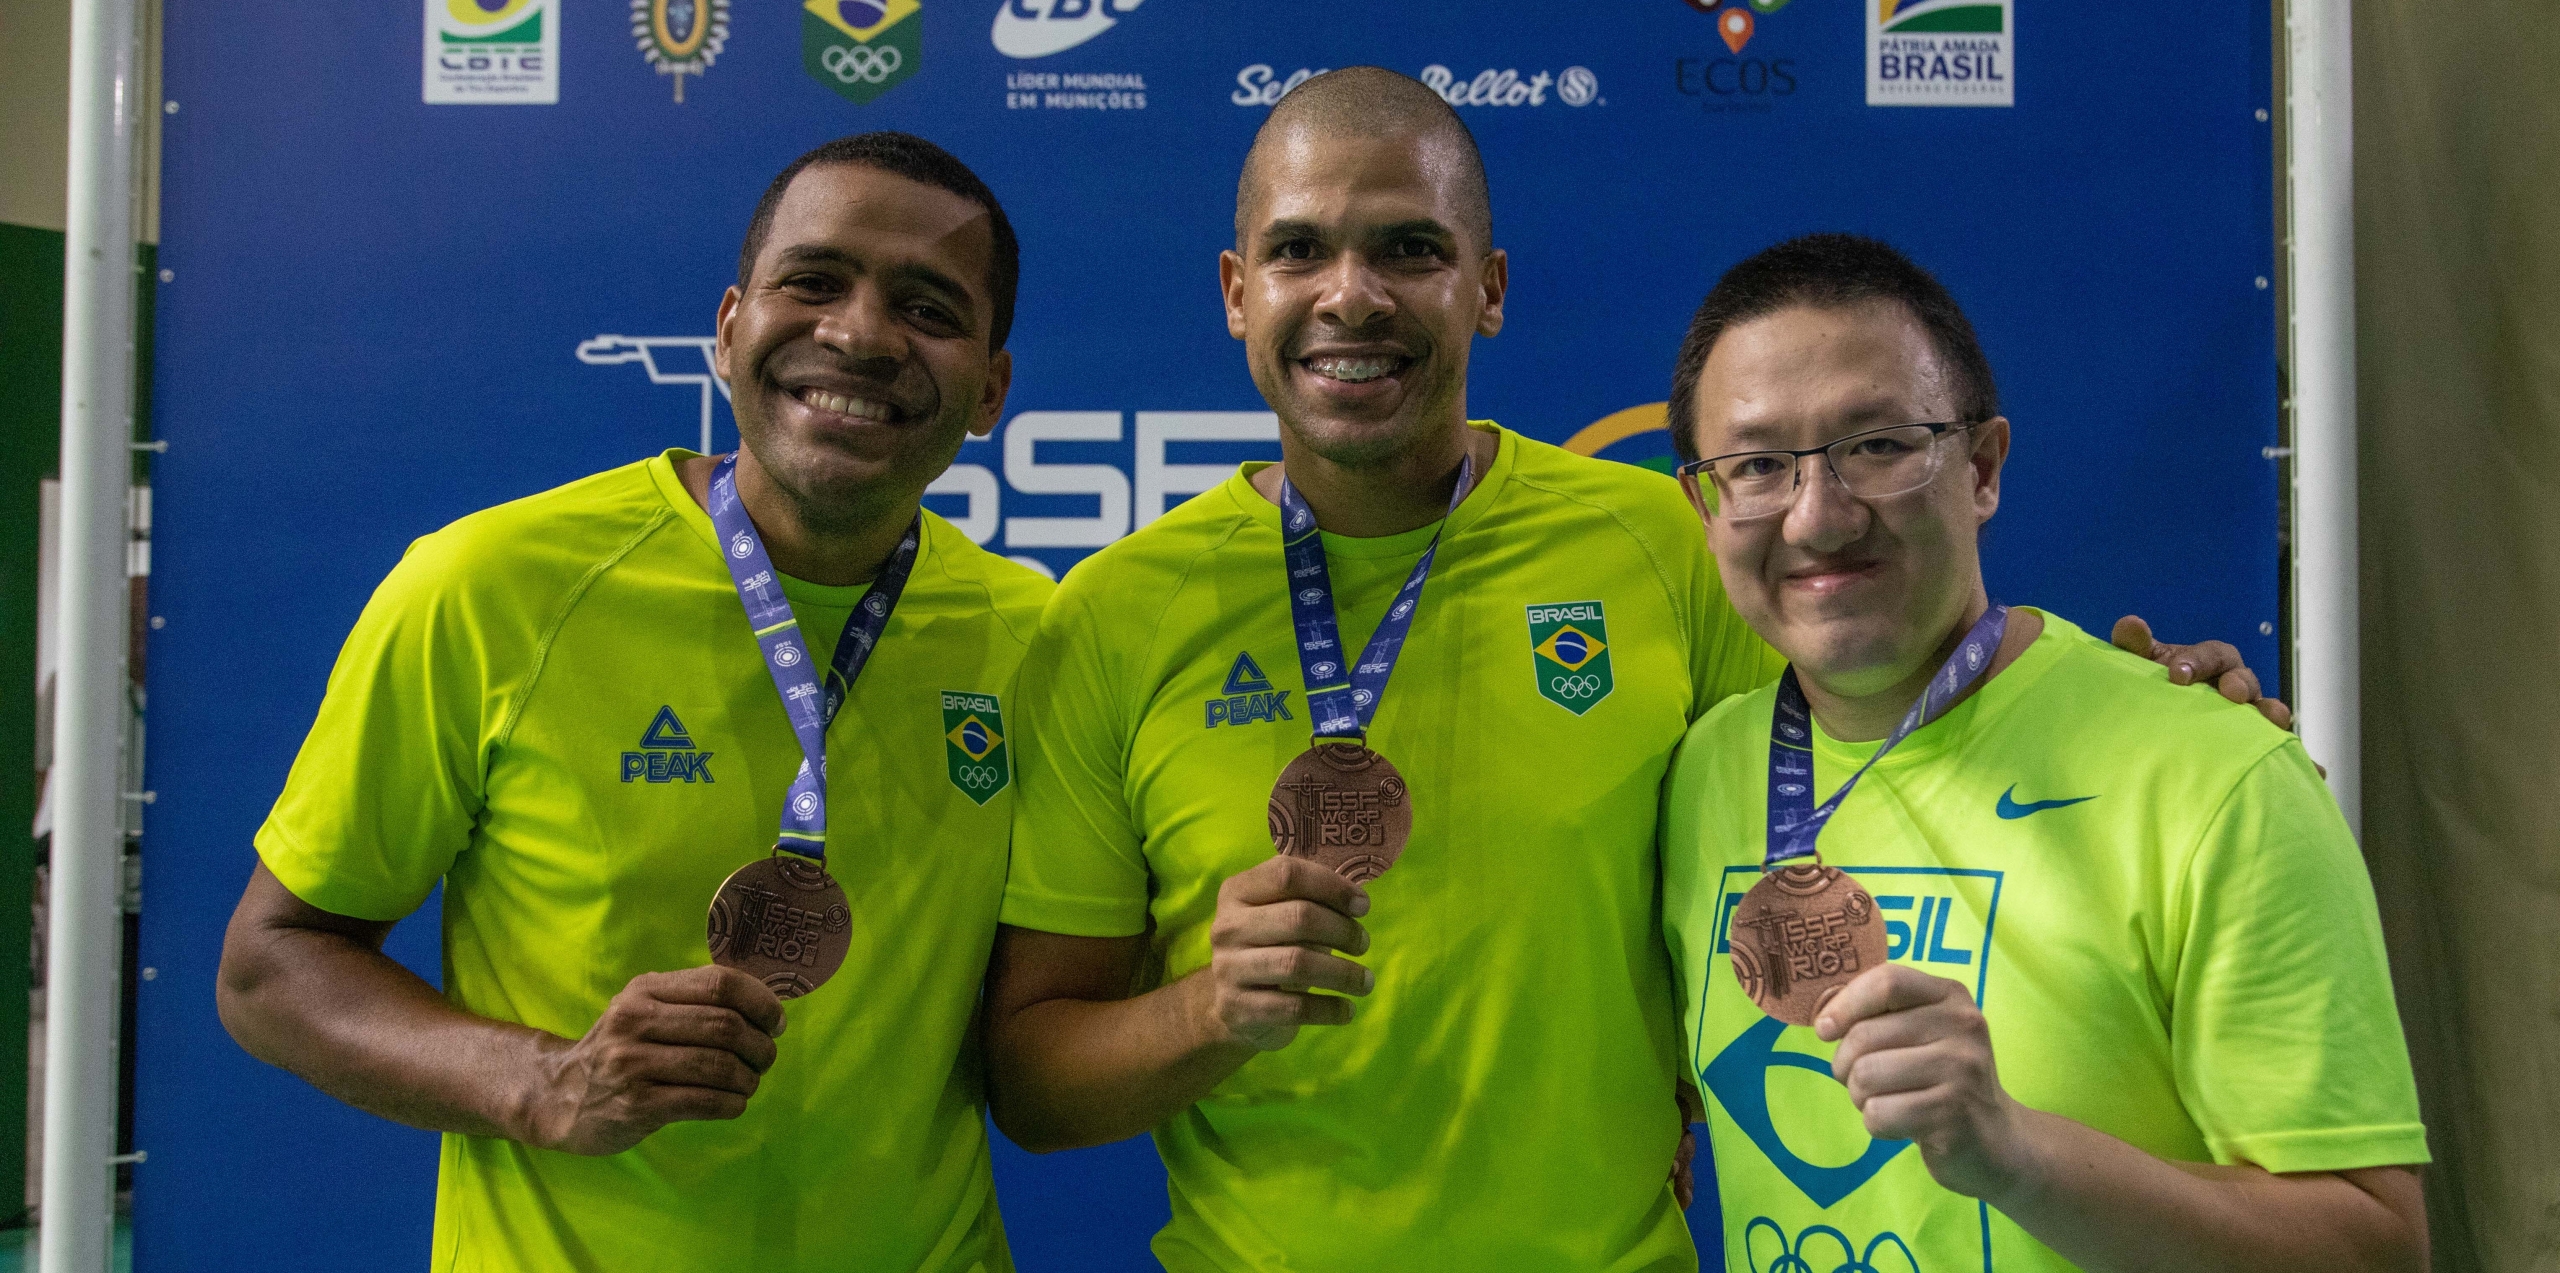 Roberto, Chateaubrian e Wu comemoram o bronze na Copa do Mundo de 2022